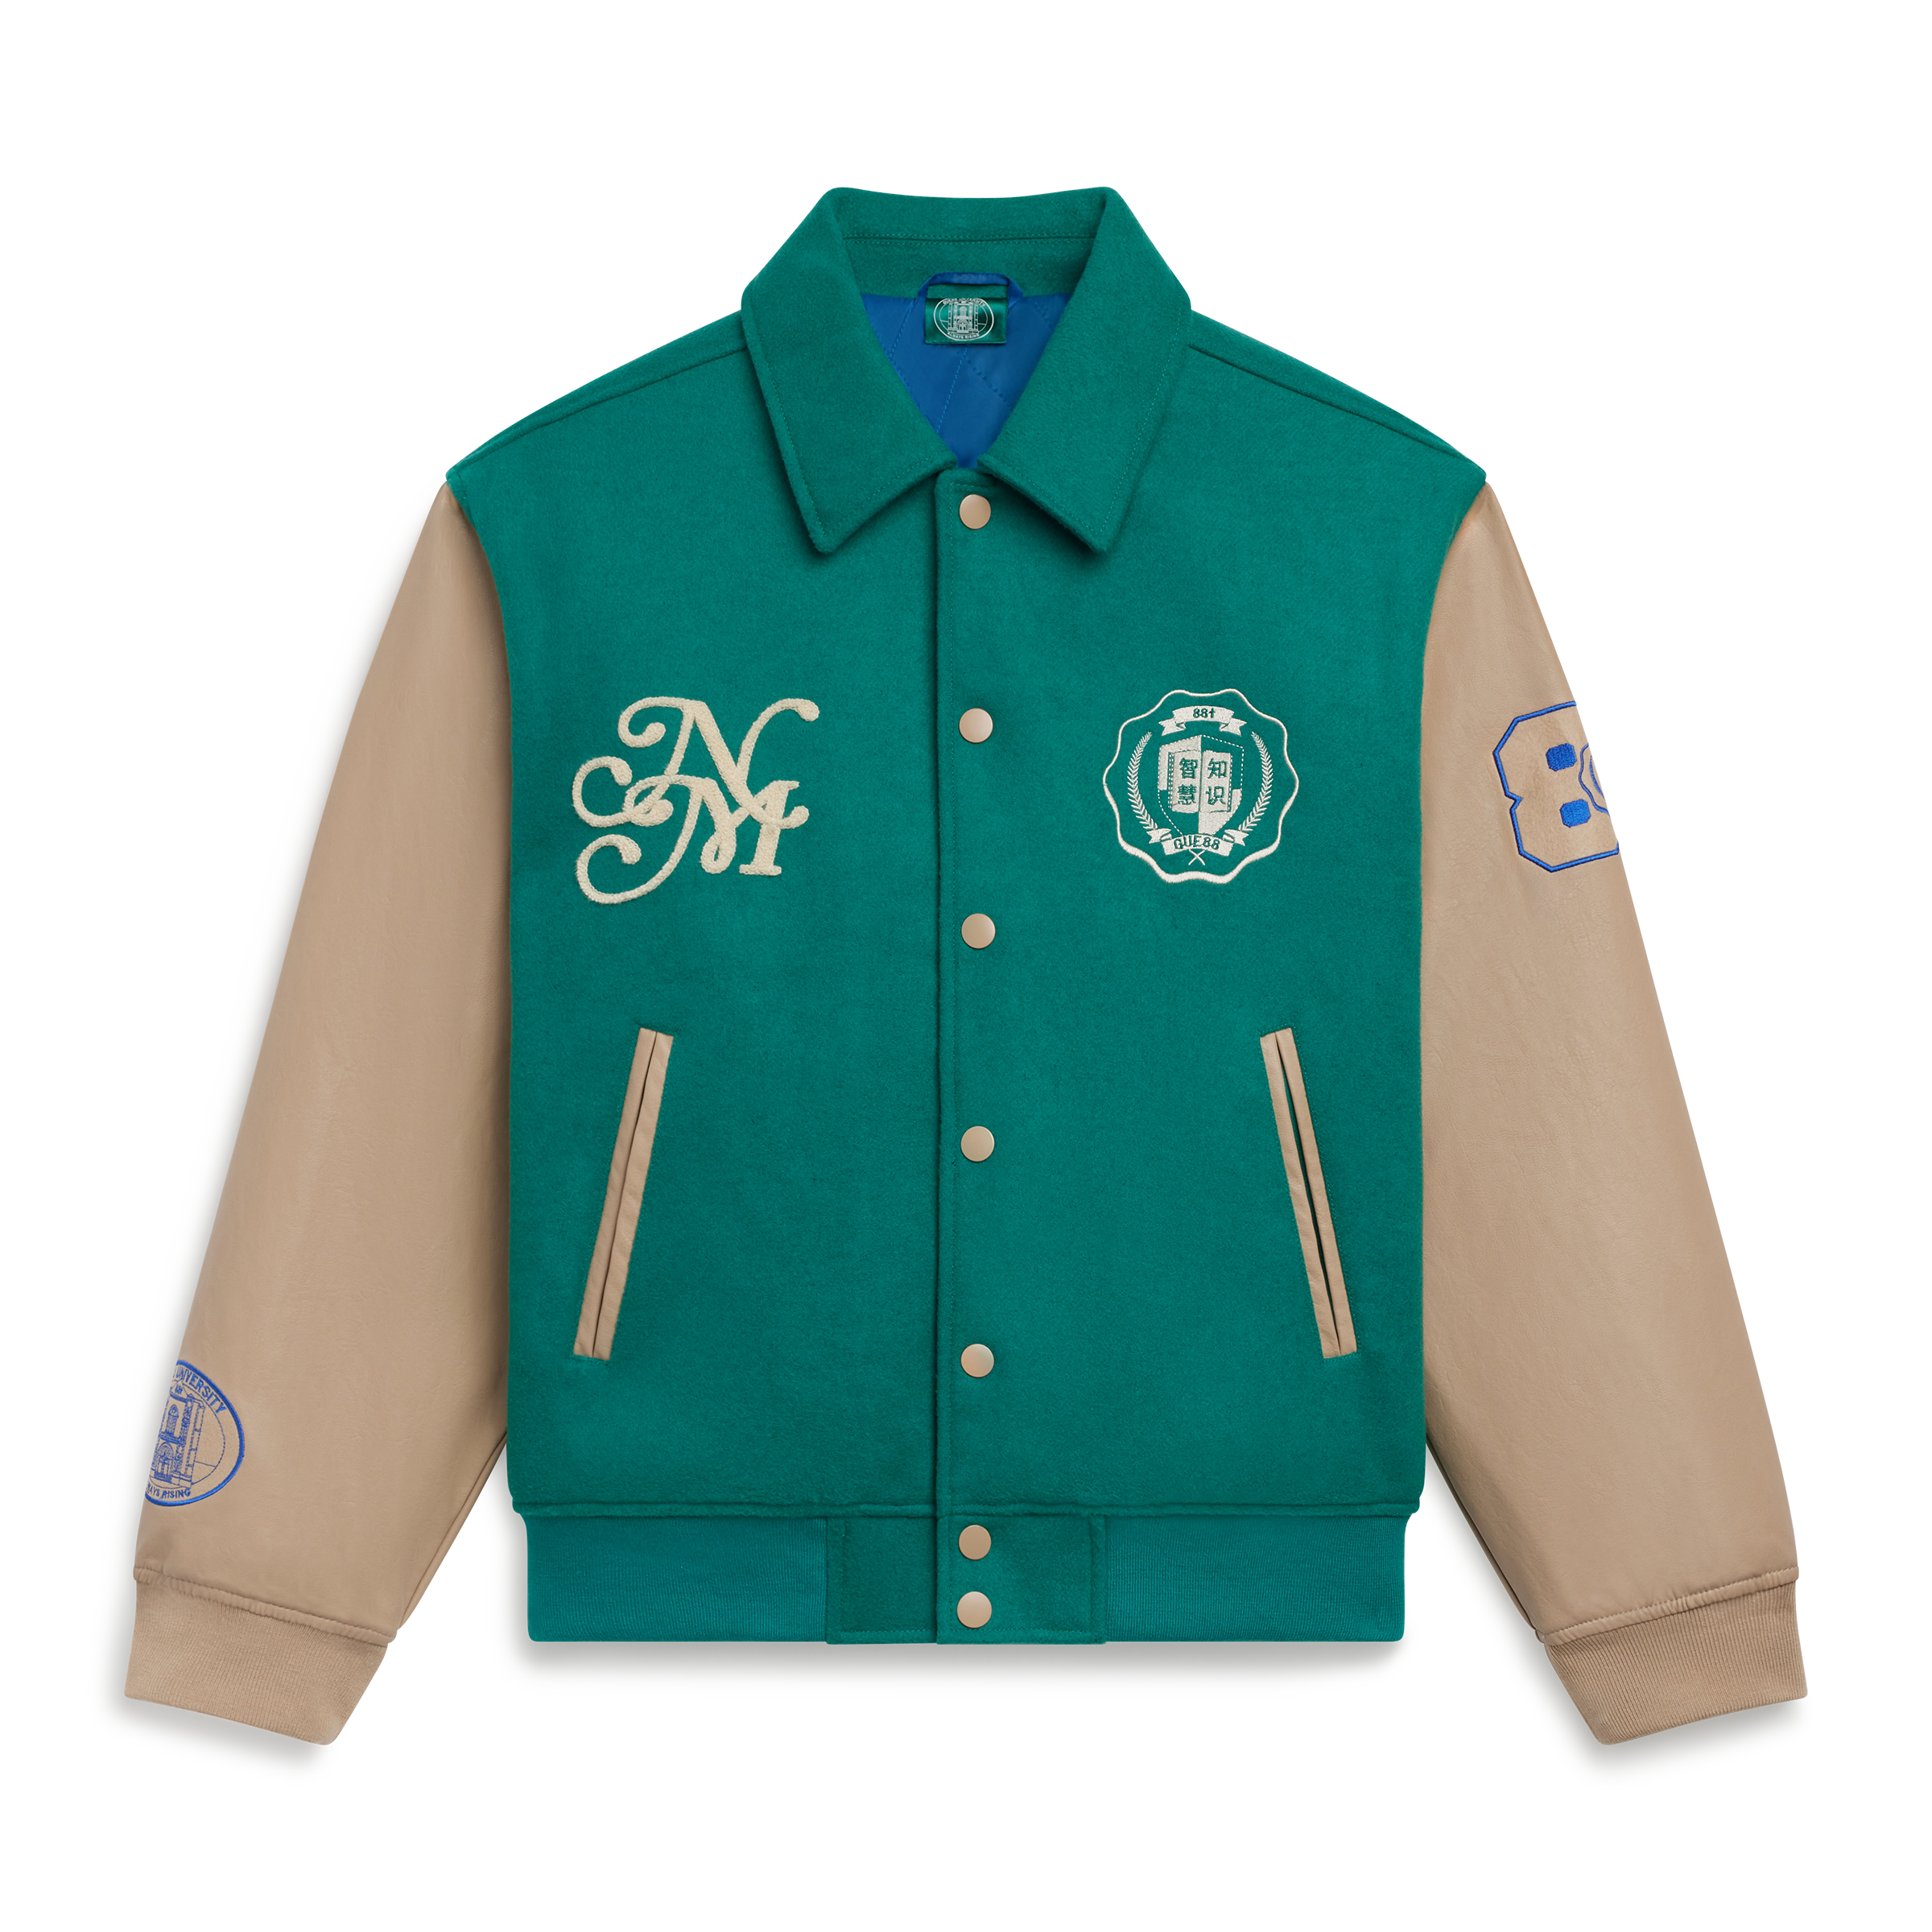 GUE88 UNIVERSITY Green Letterman Jacket